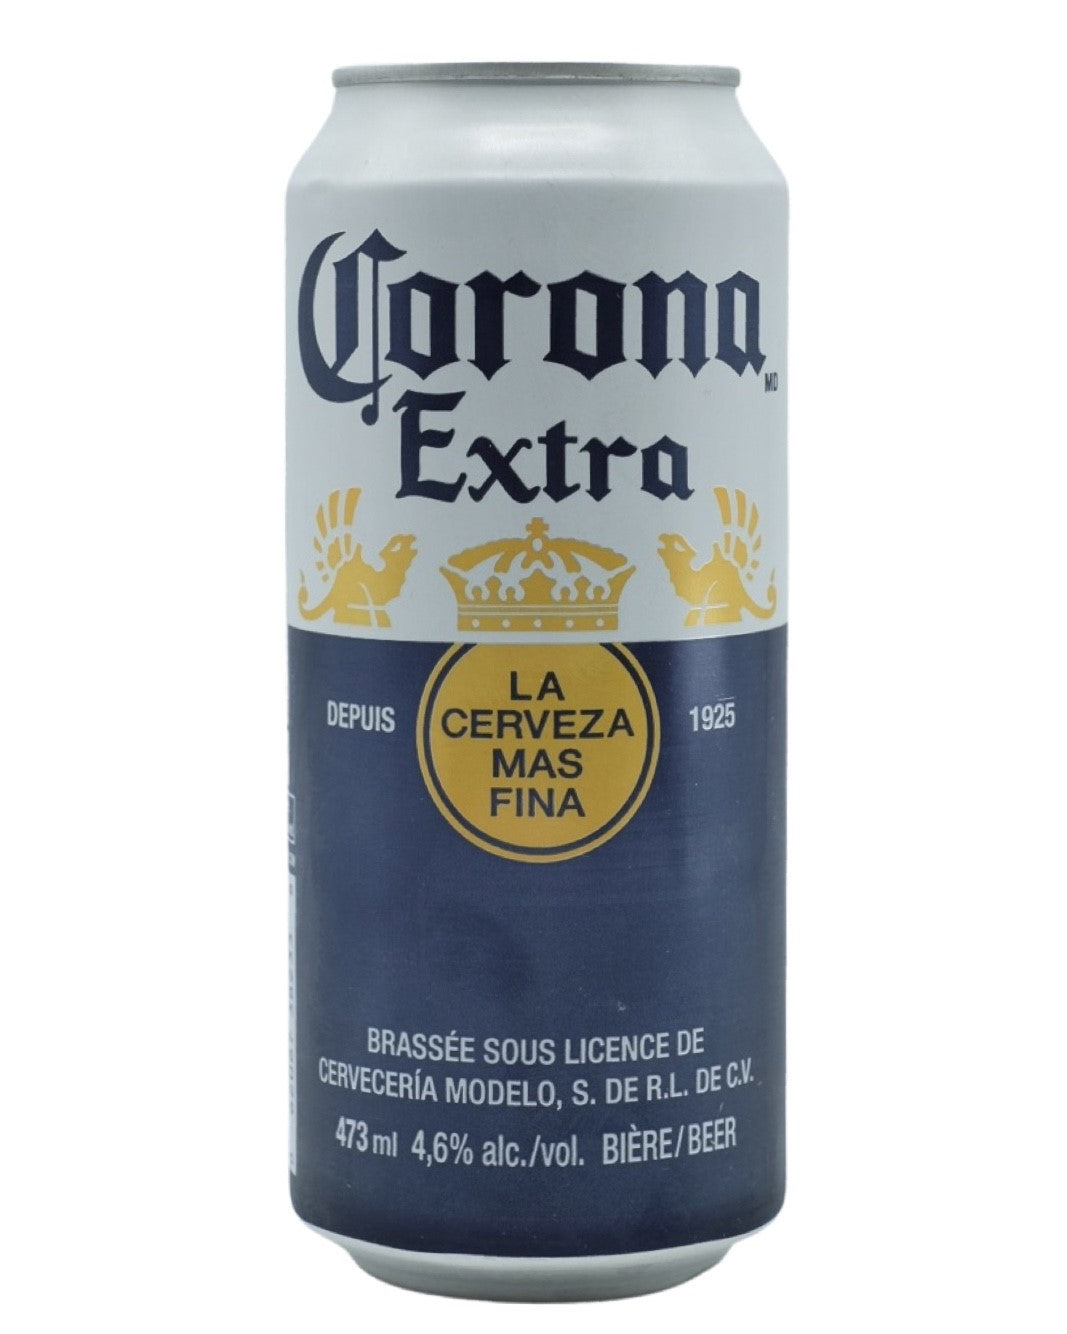 Corona Single